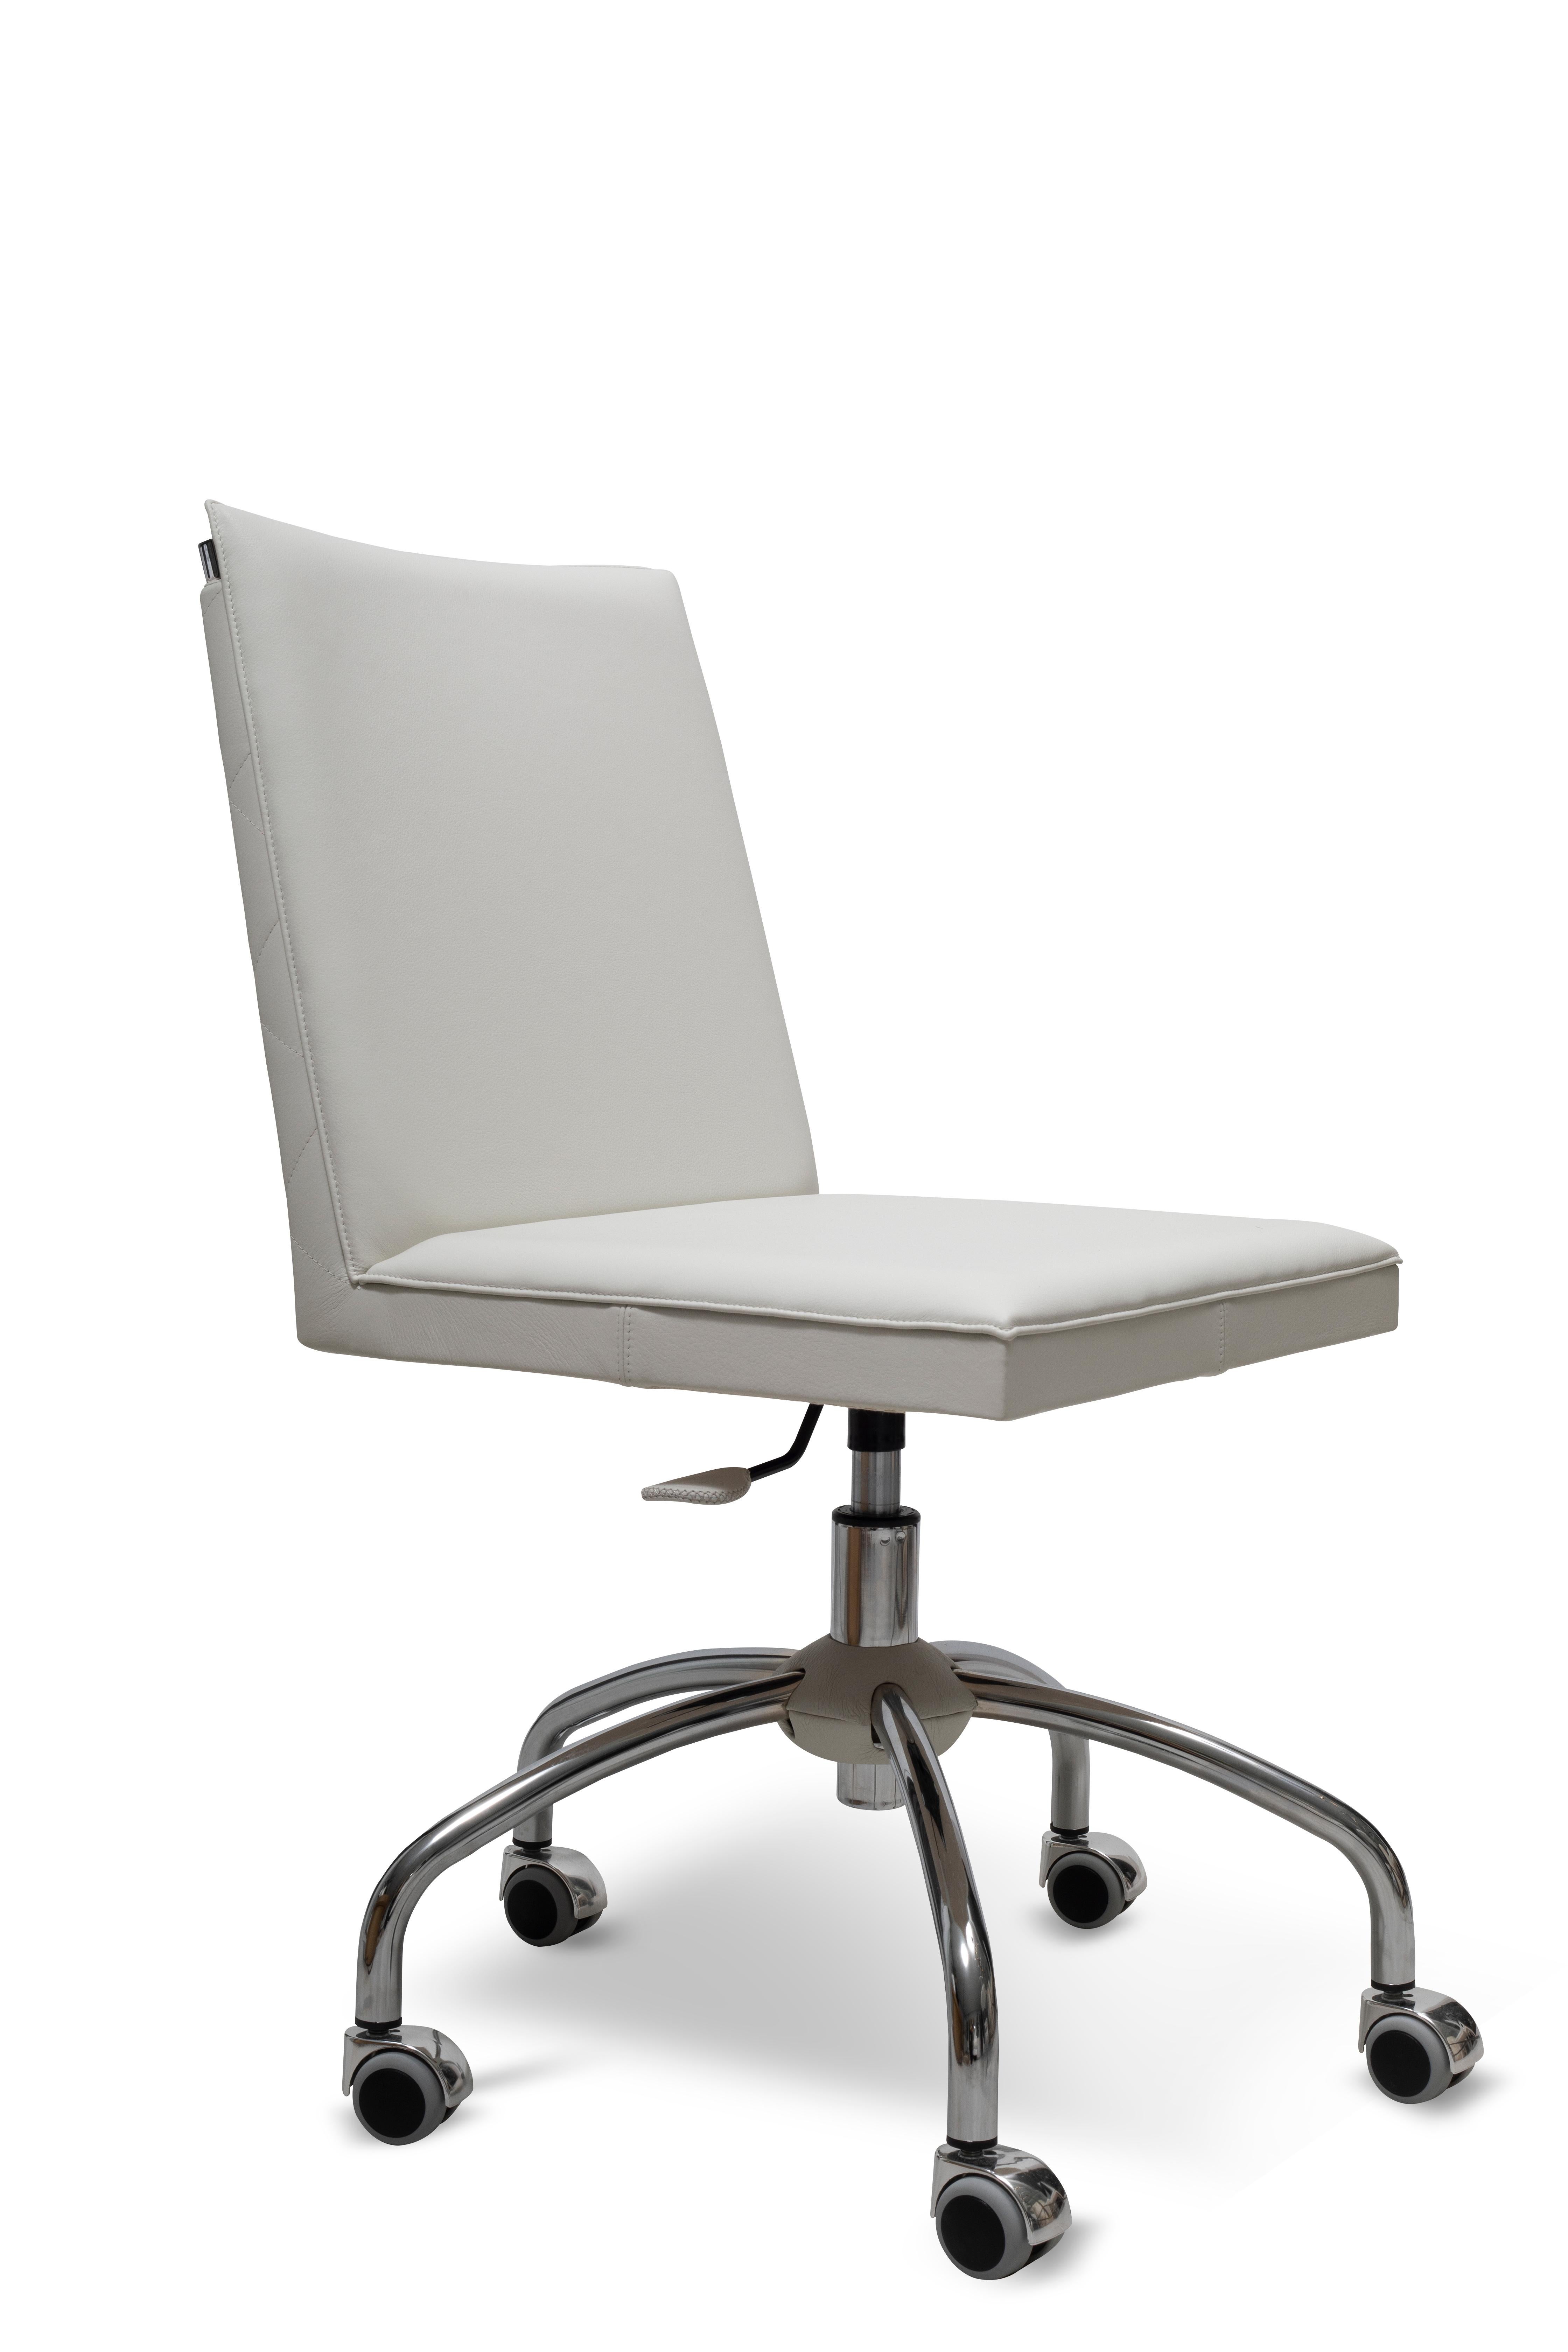 Swivel Leather Desk Chair, Cubé Desk Chair In New Condition For Sale In Miami, FL